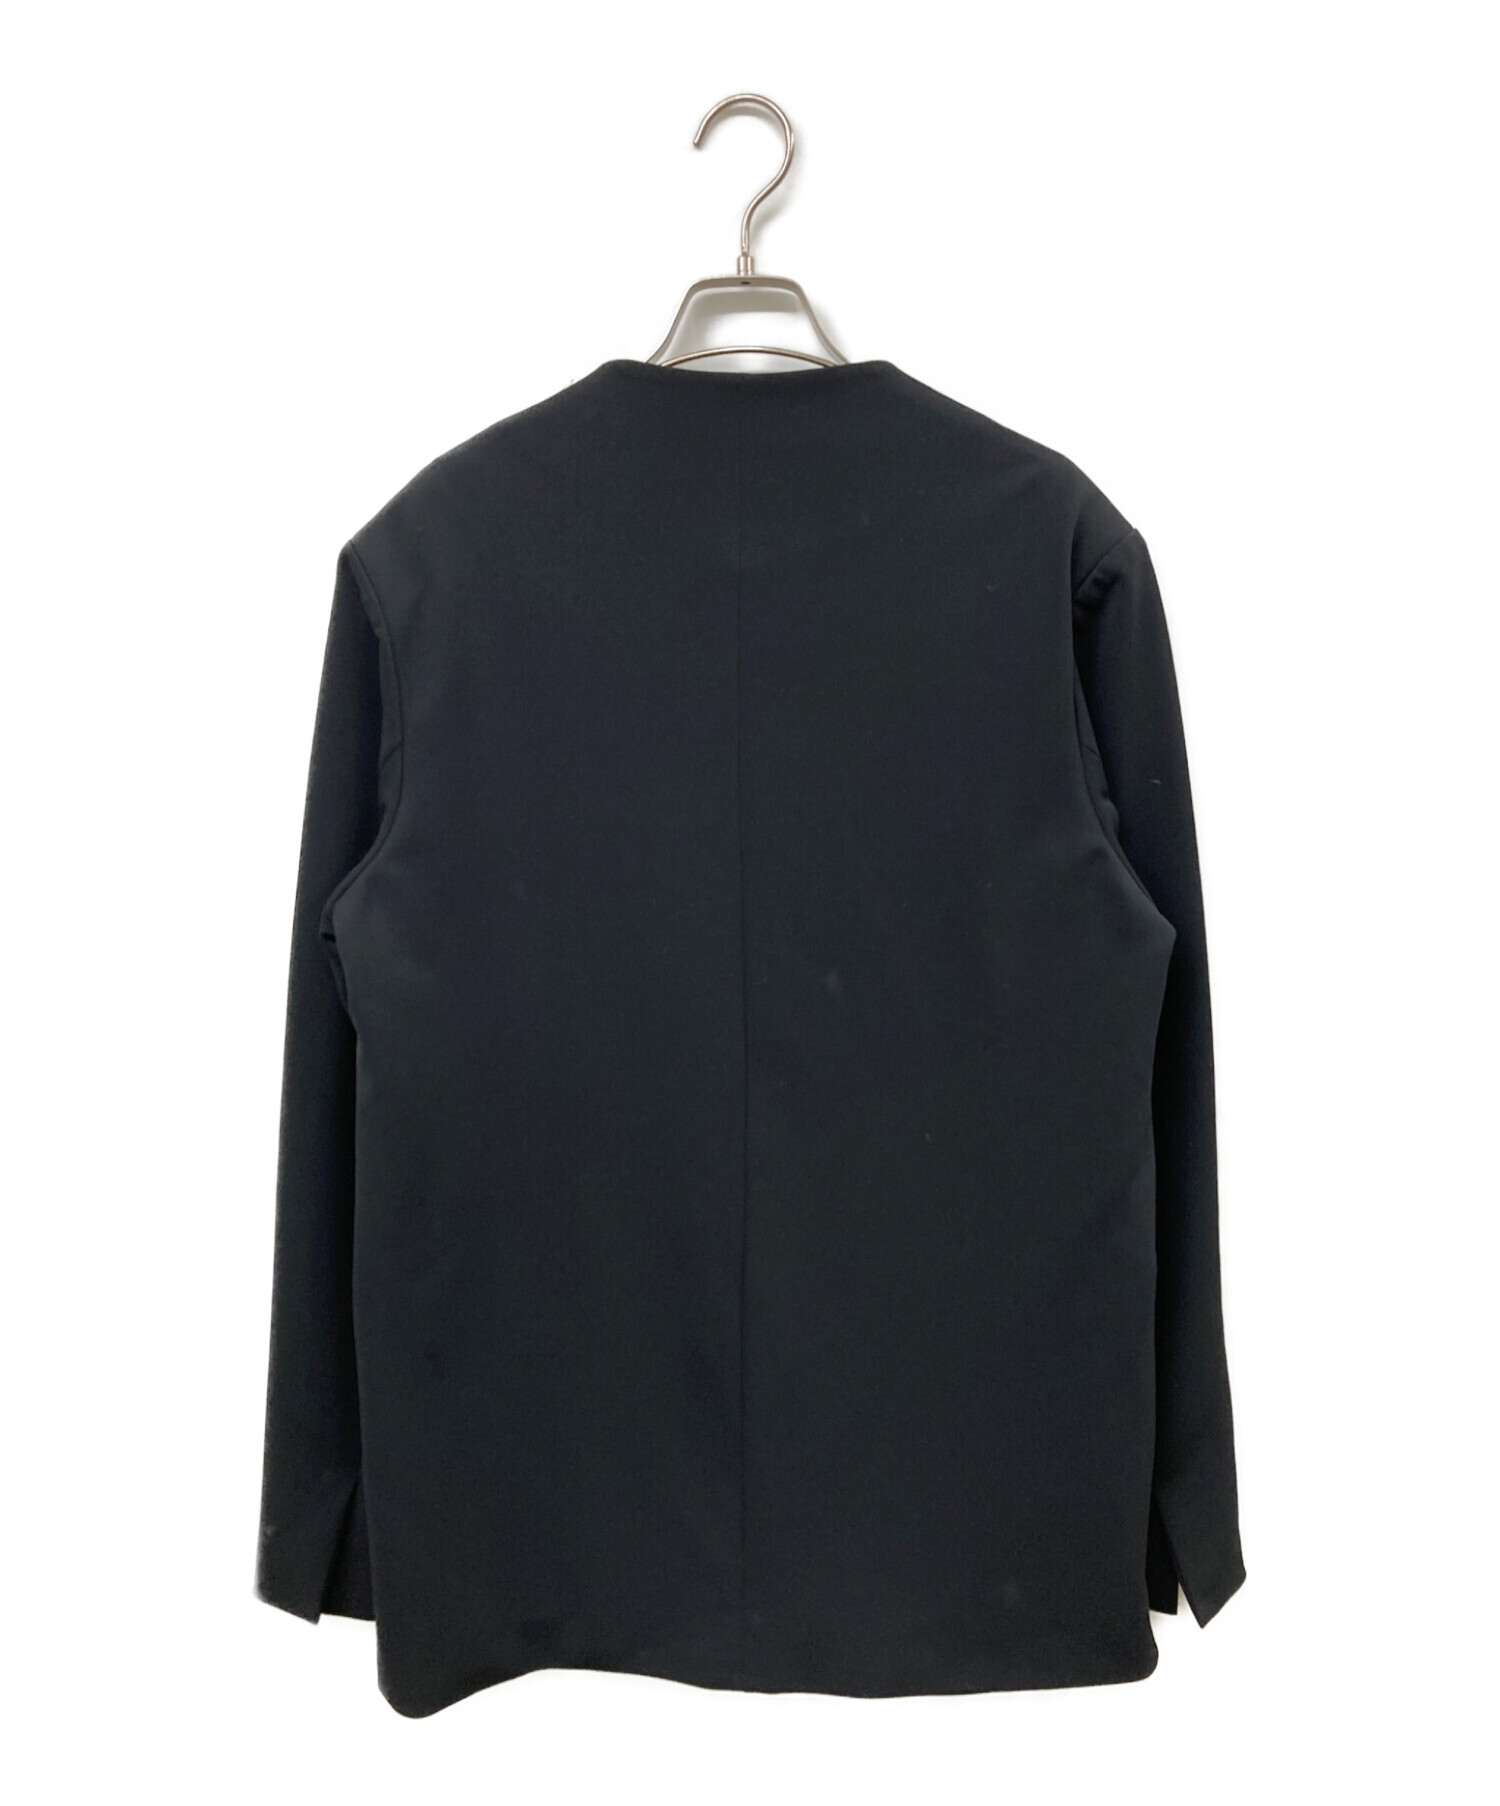 Uneck Pullover Jacket ブラック38